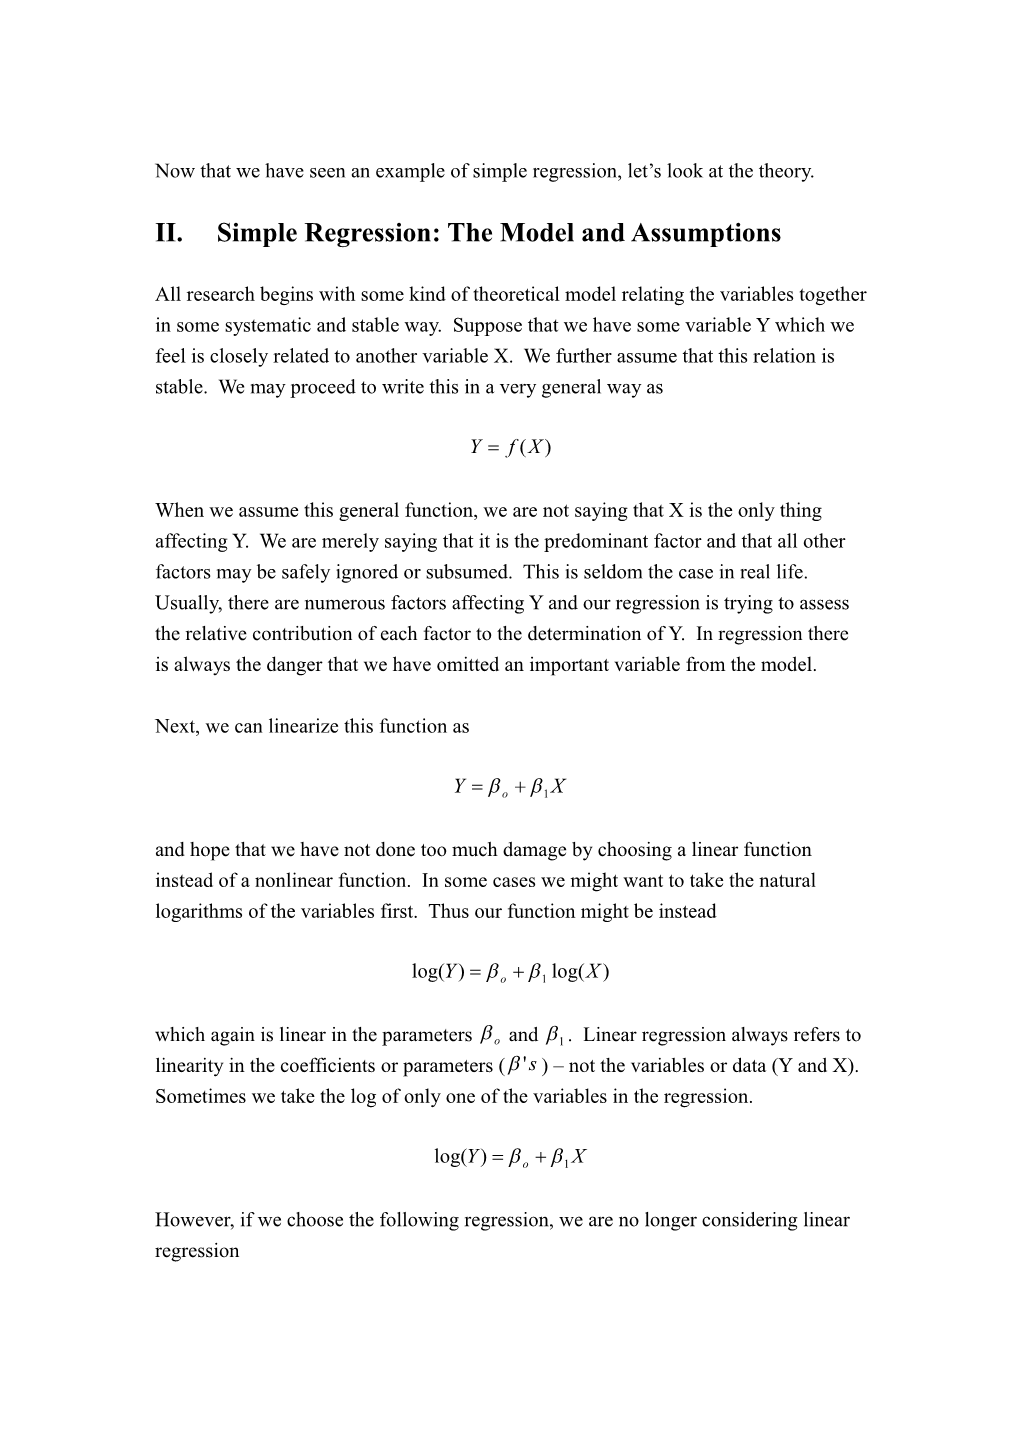 Summary of Simple Regression